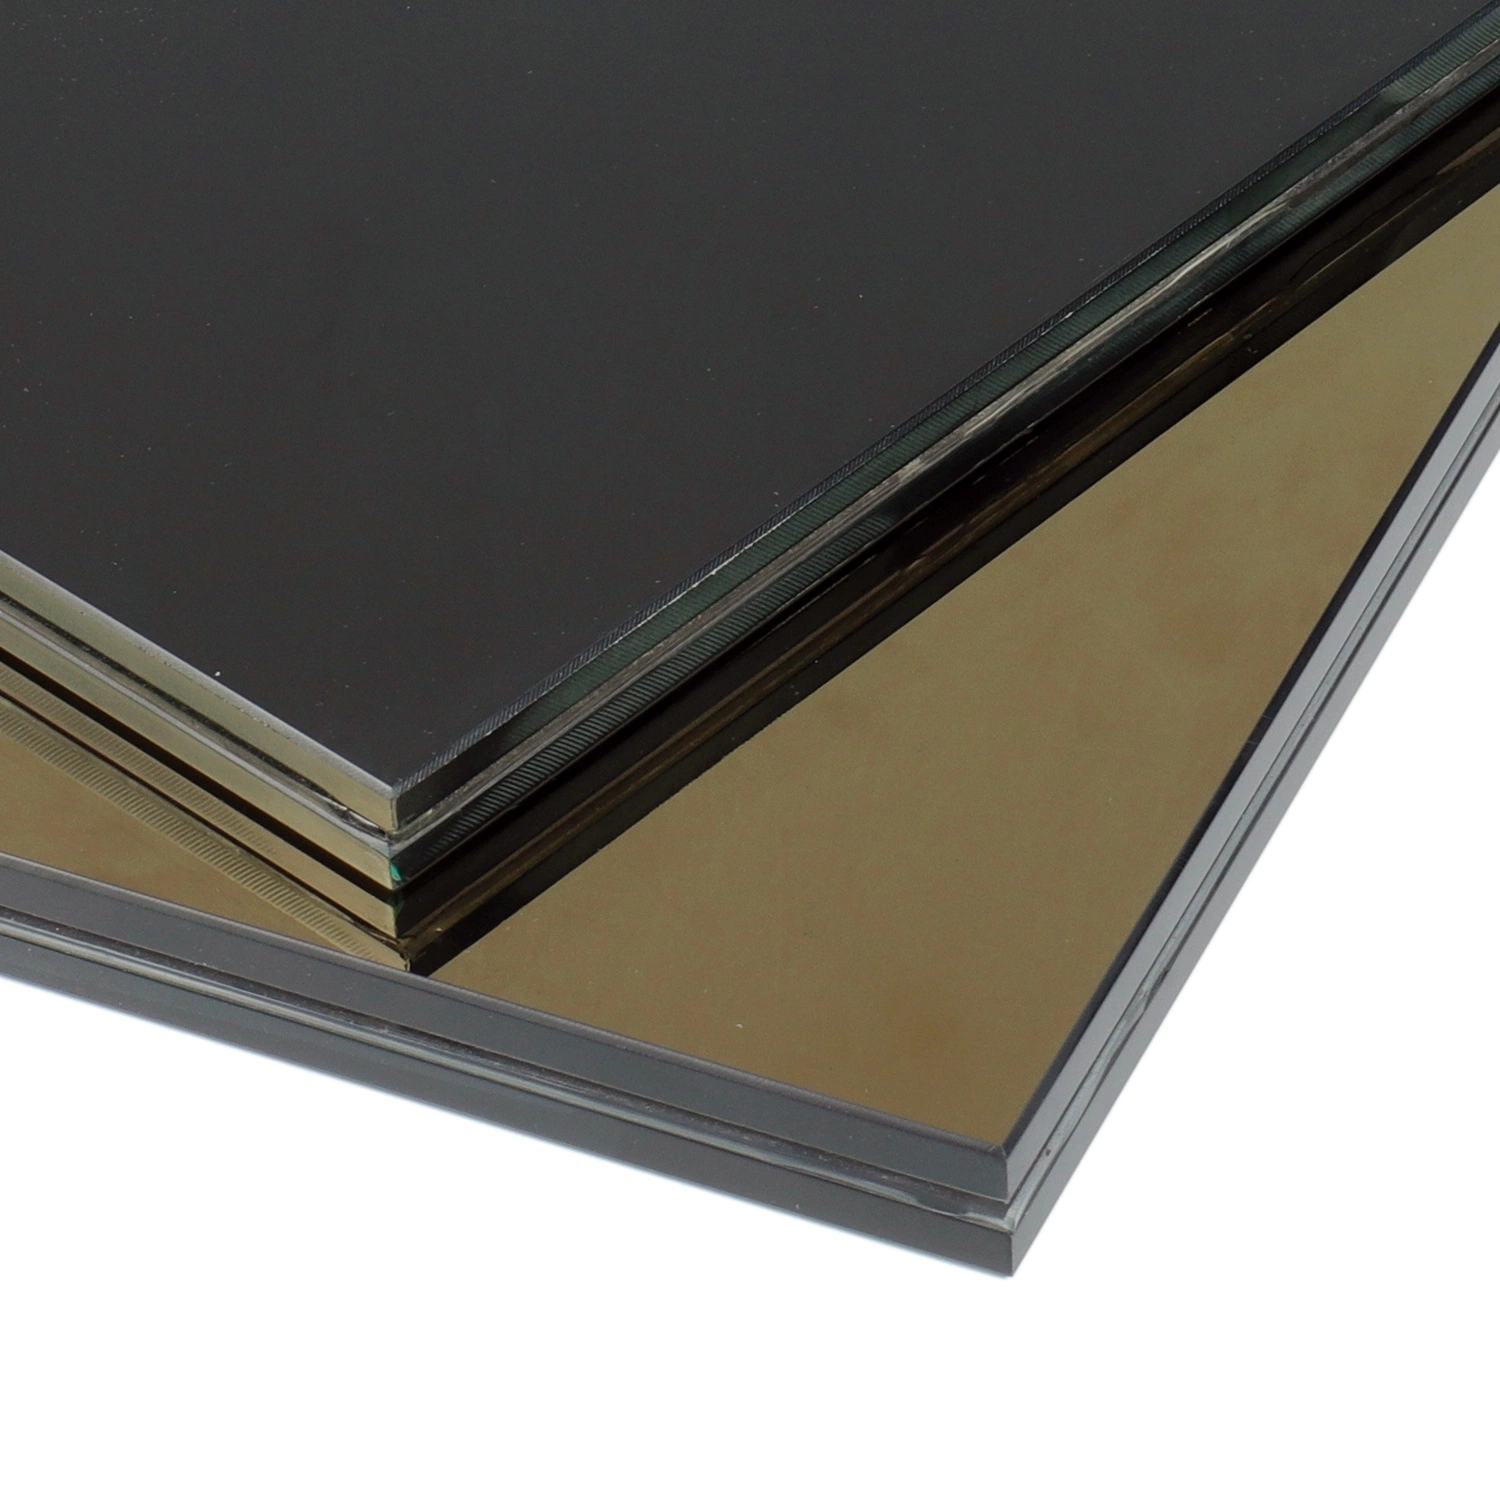 Ultra Clear/Low Iron Silk Screen Printing PVB/Sgp Tempered Safety Laminating/Laminated Glass for Balustrade Handrail Railing